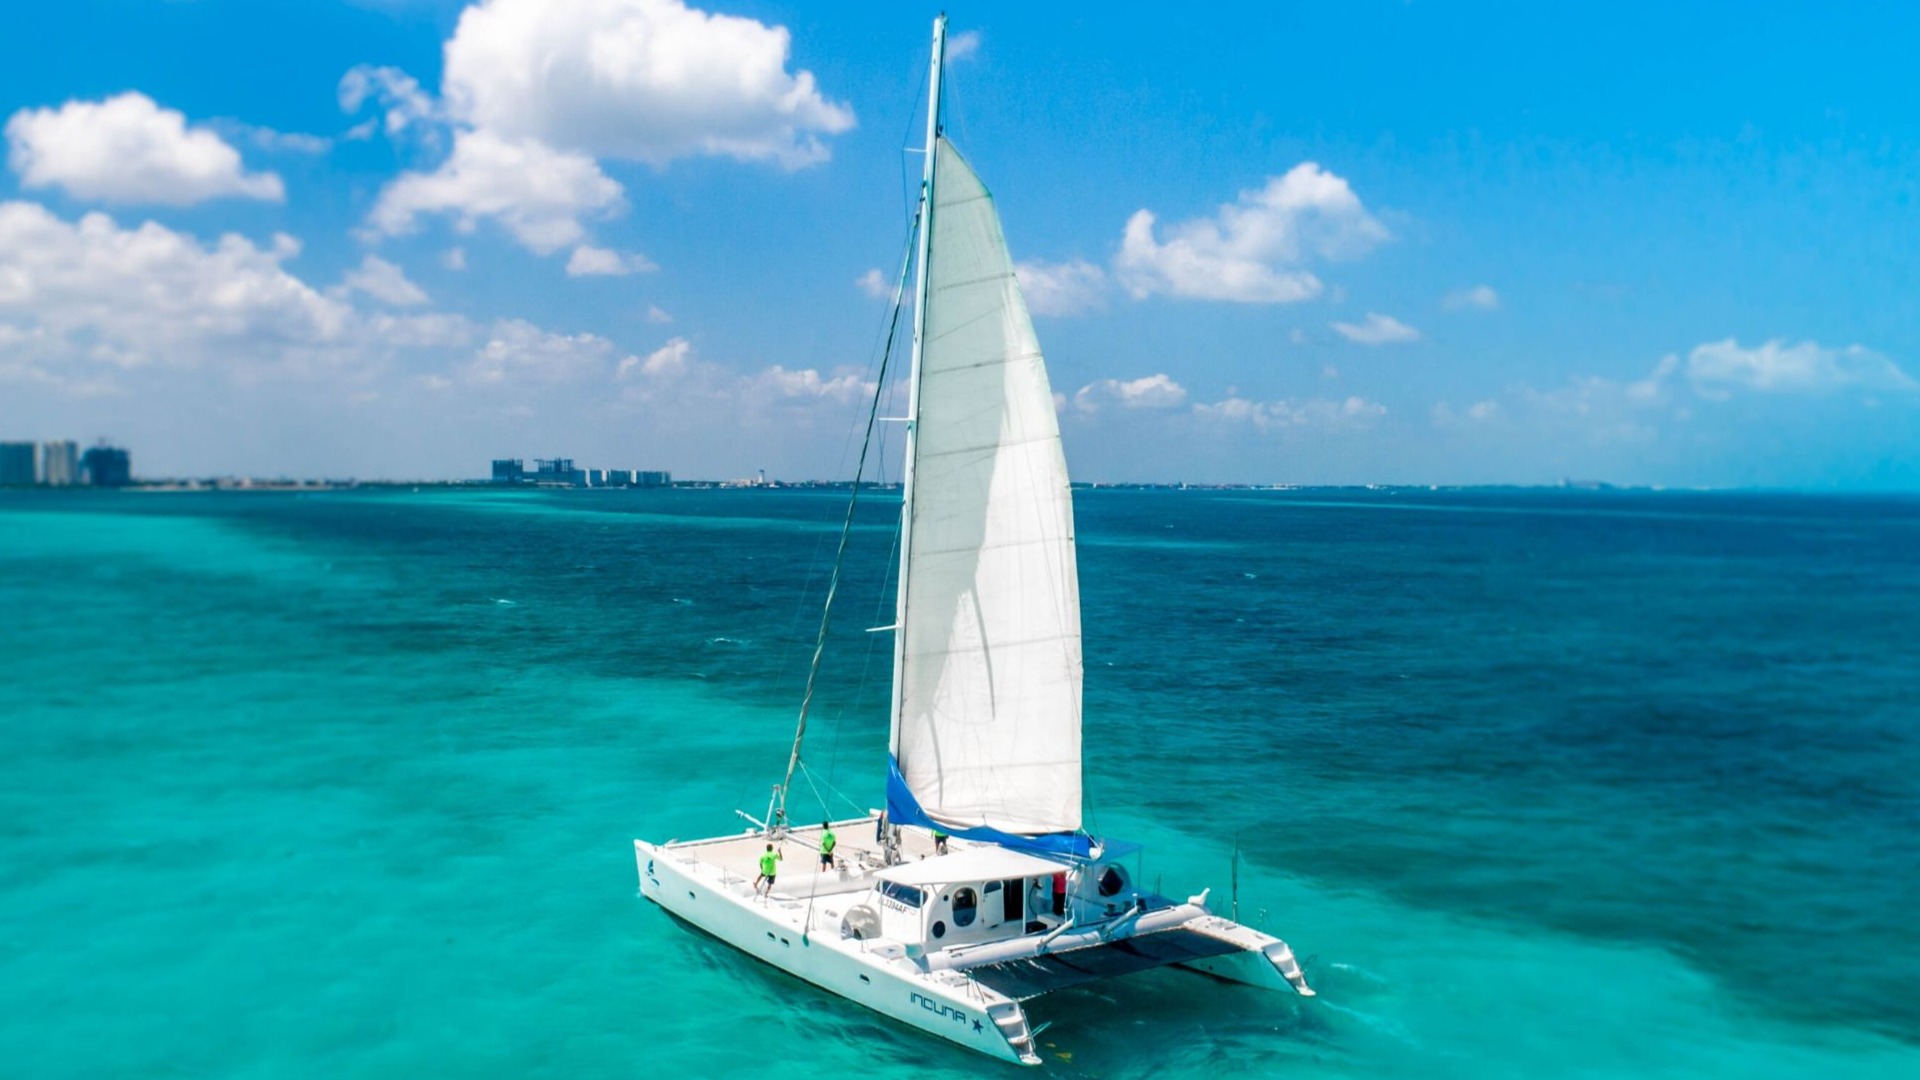 Induna - Isla Mujeres Catamaran Tour - Cancun Sailing